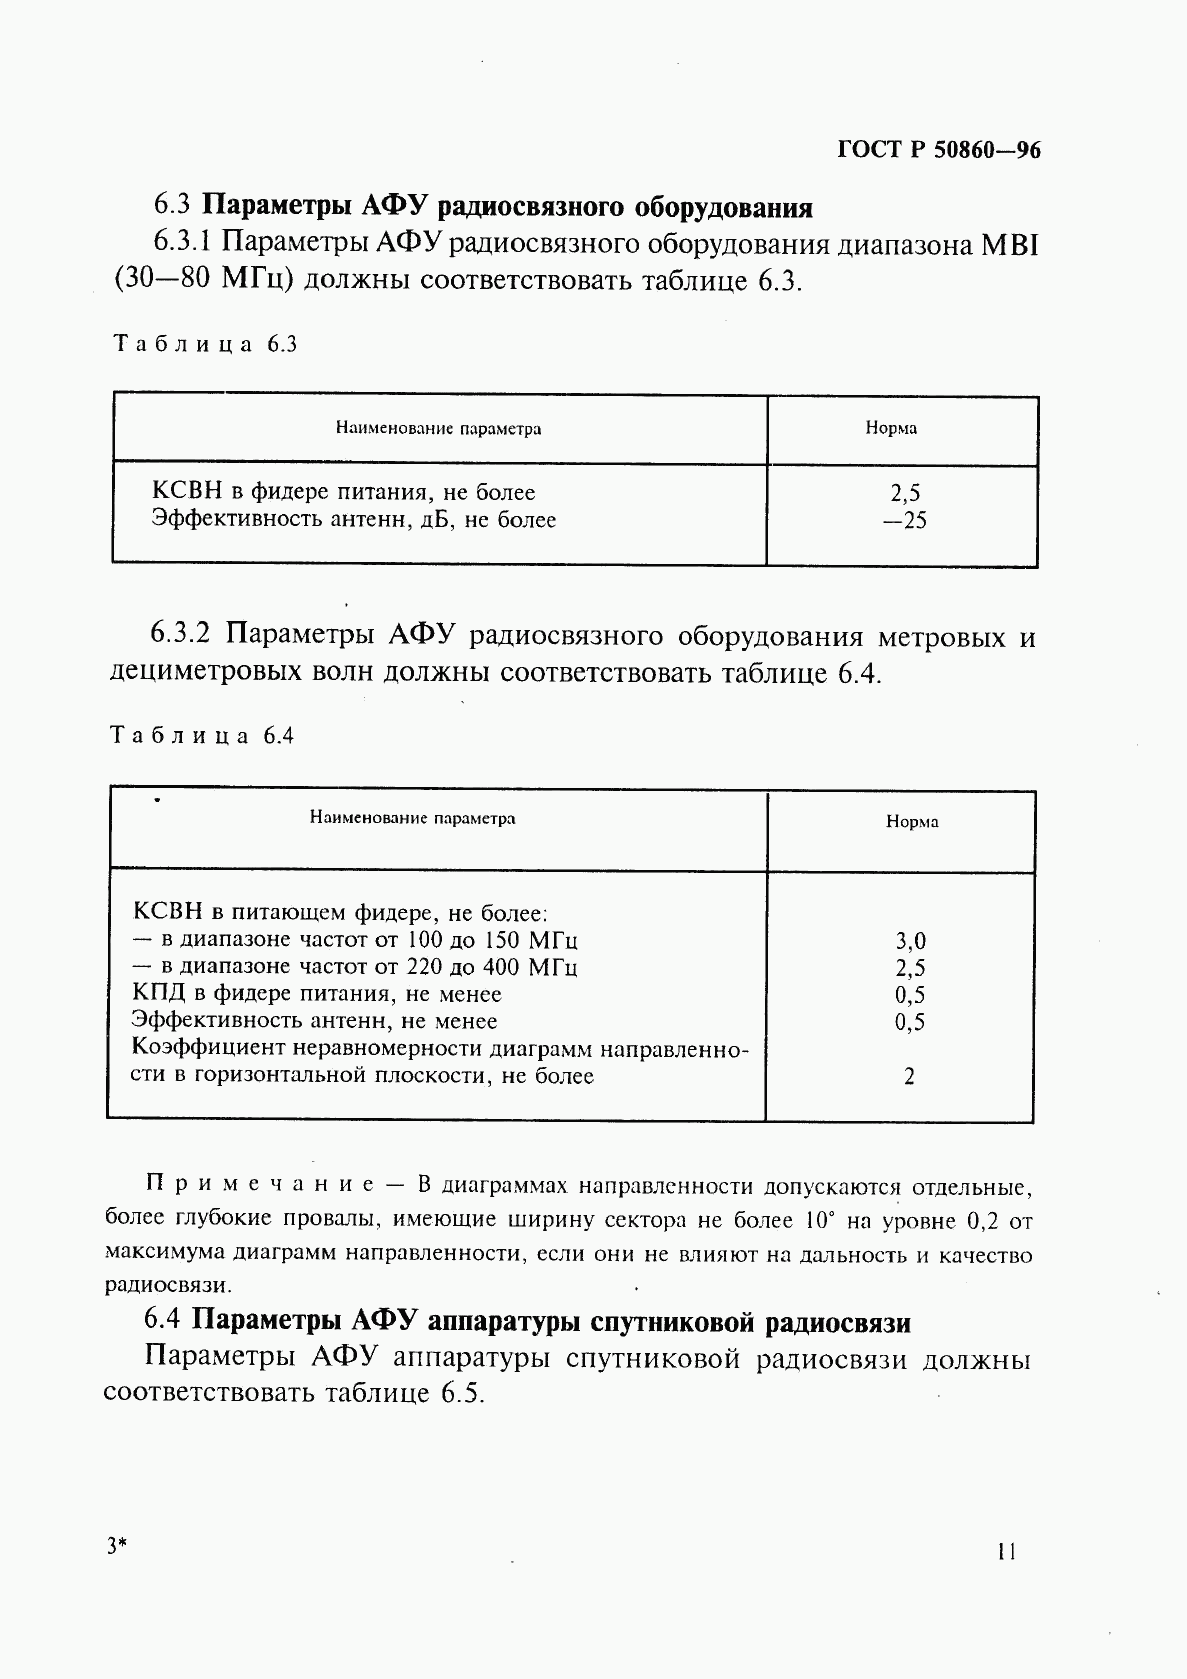 ГОСТ Р 50860-96, страница 16